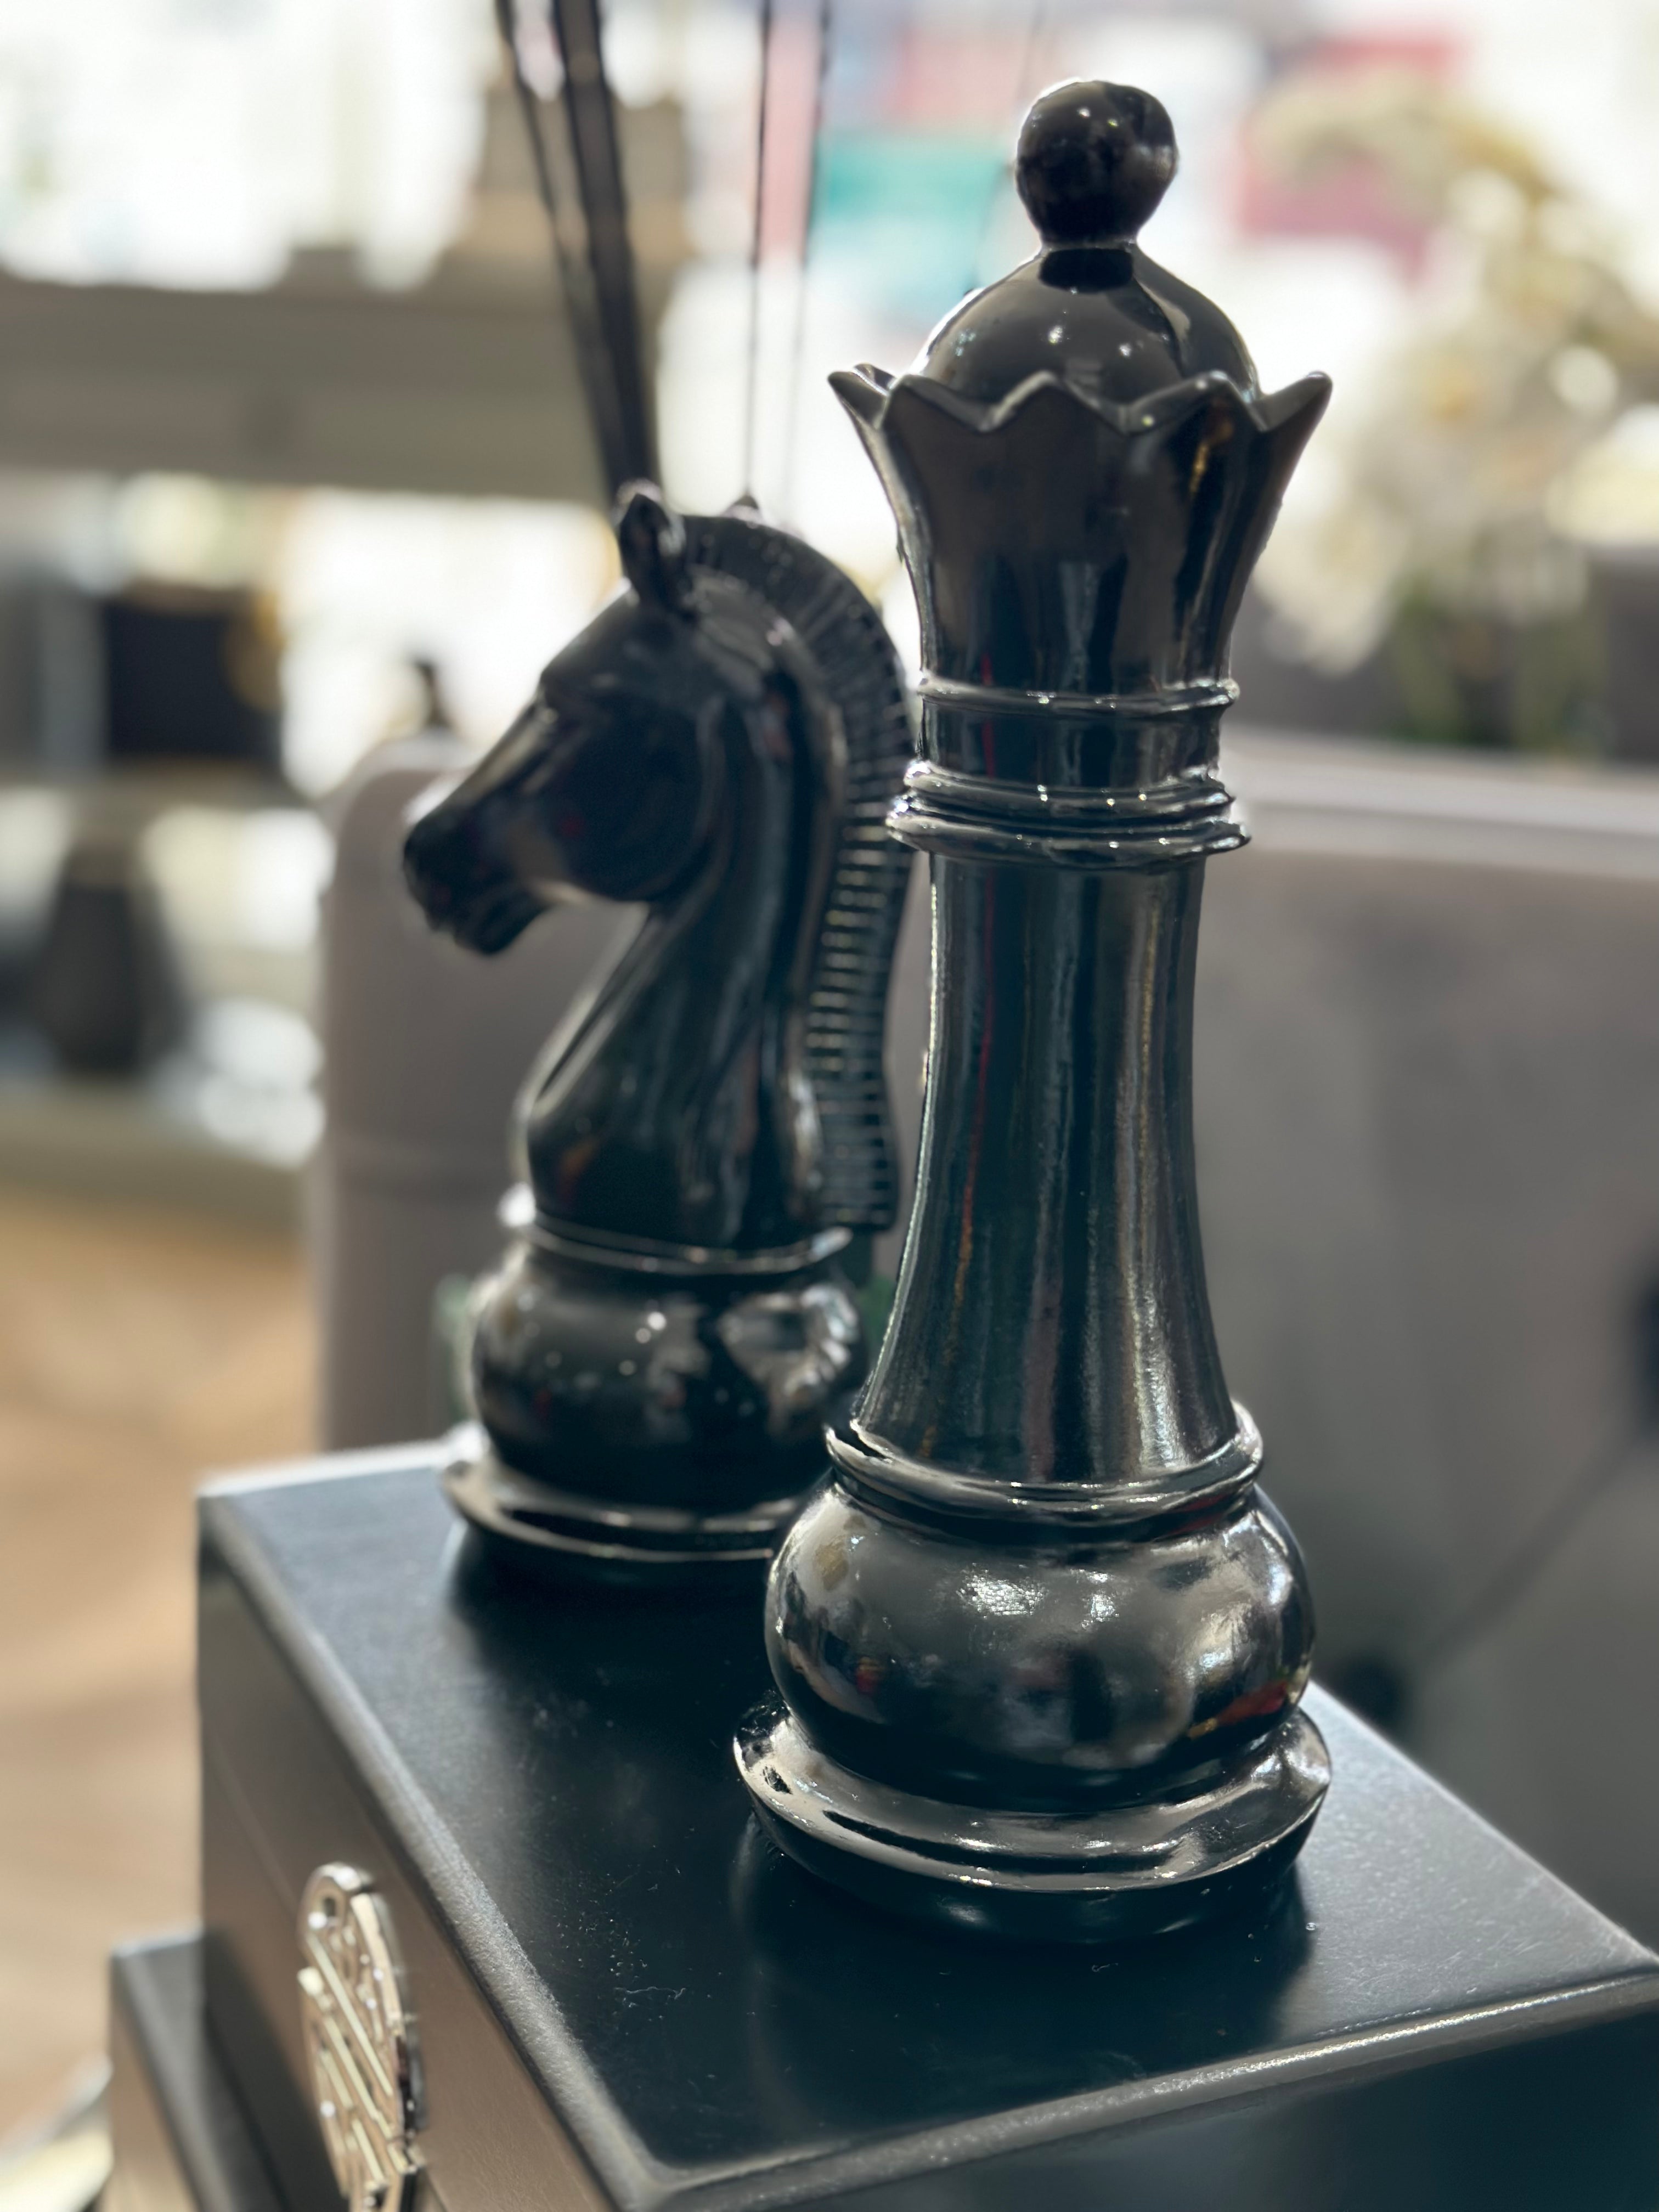 Matte Black Pawn Chess Piece Ornament – Chic Interiors Cheshire